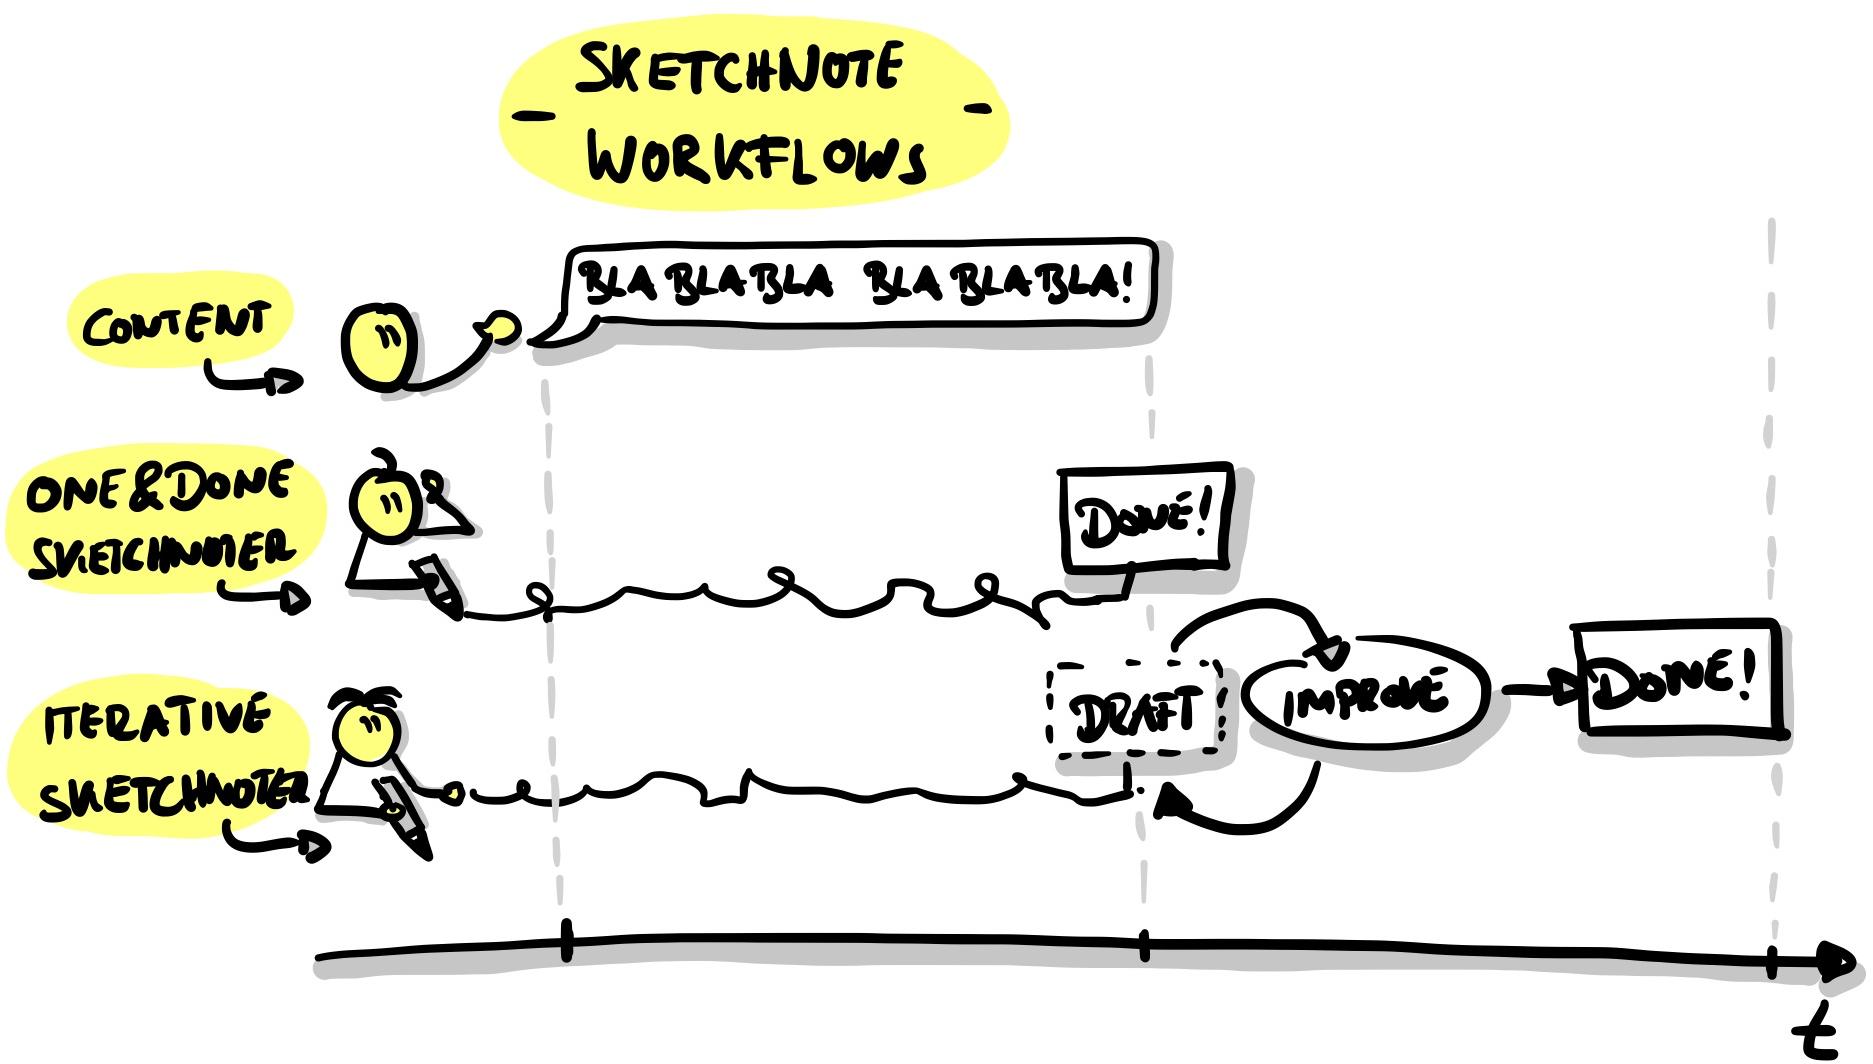 Sketchnotes Workflows by @BartschatLars, CC BY 4.0